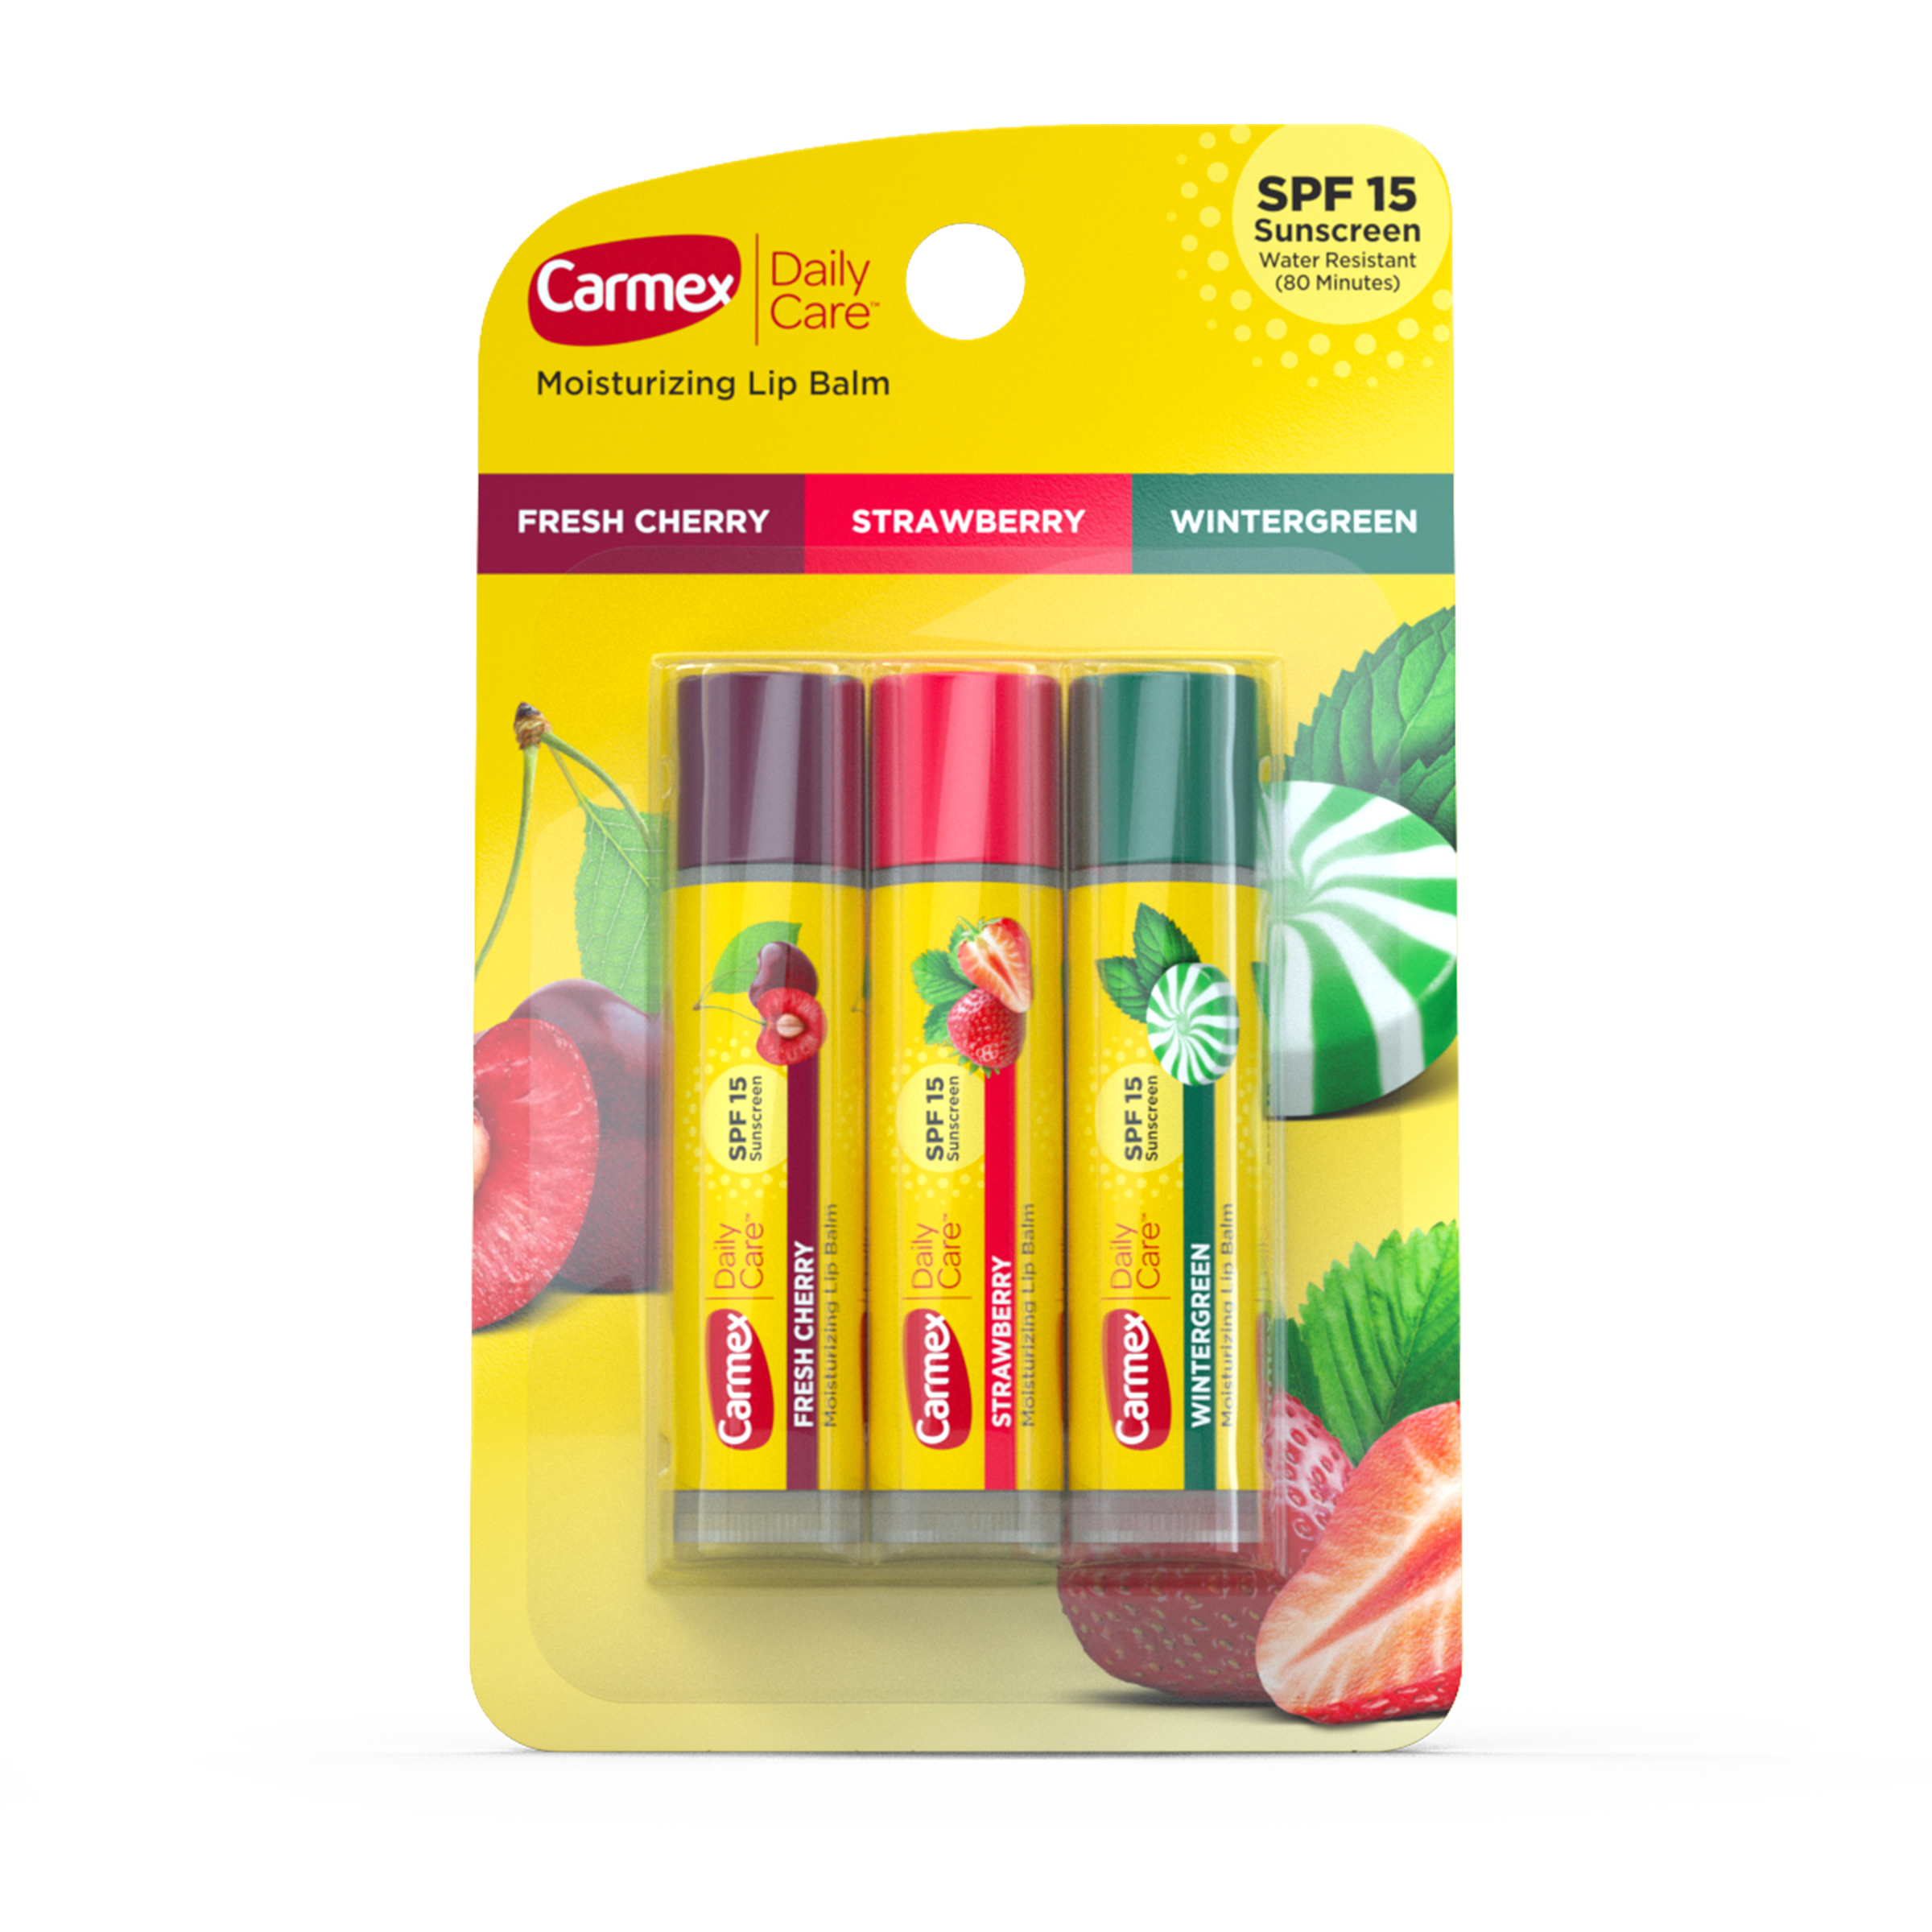 Carmex Daily Care Moisturizing Lip Balm Sticks, SPF 15, Multi-Flavor Lip Balm, 3 Count (1 Pack of 3) - image 12 of 12